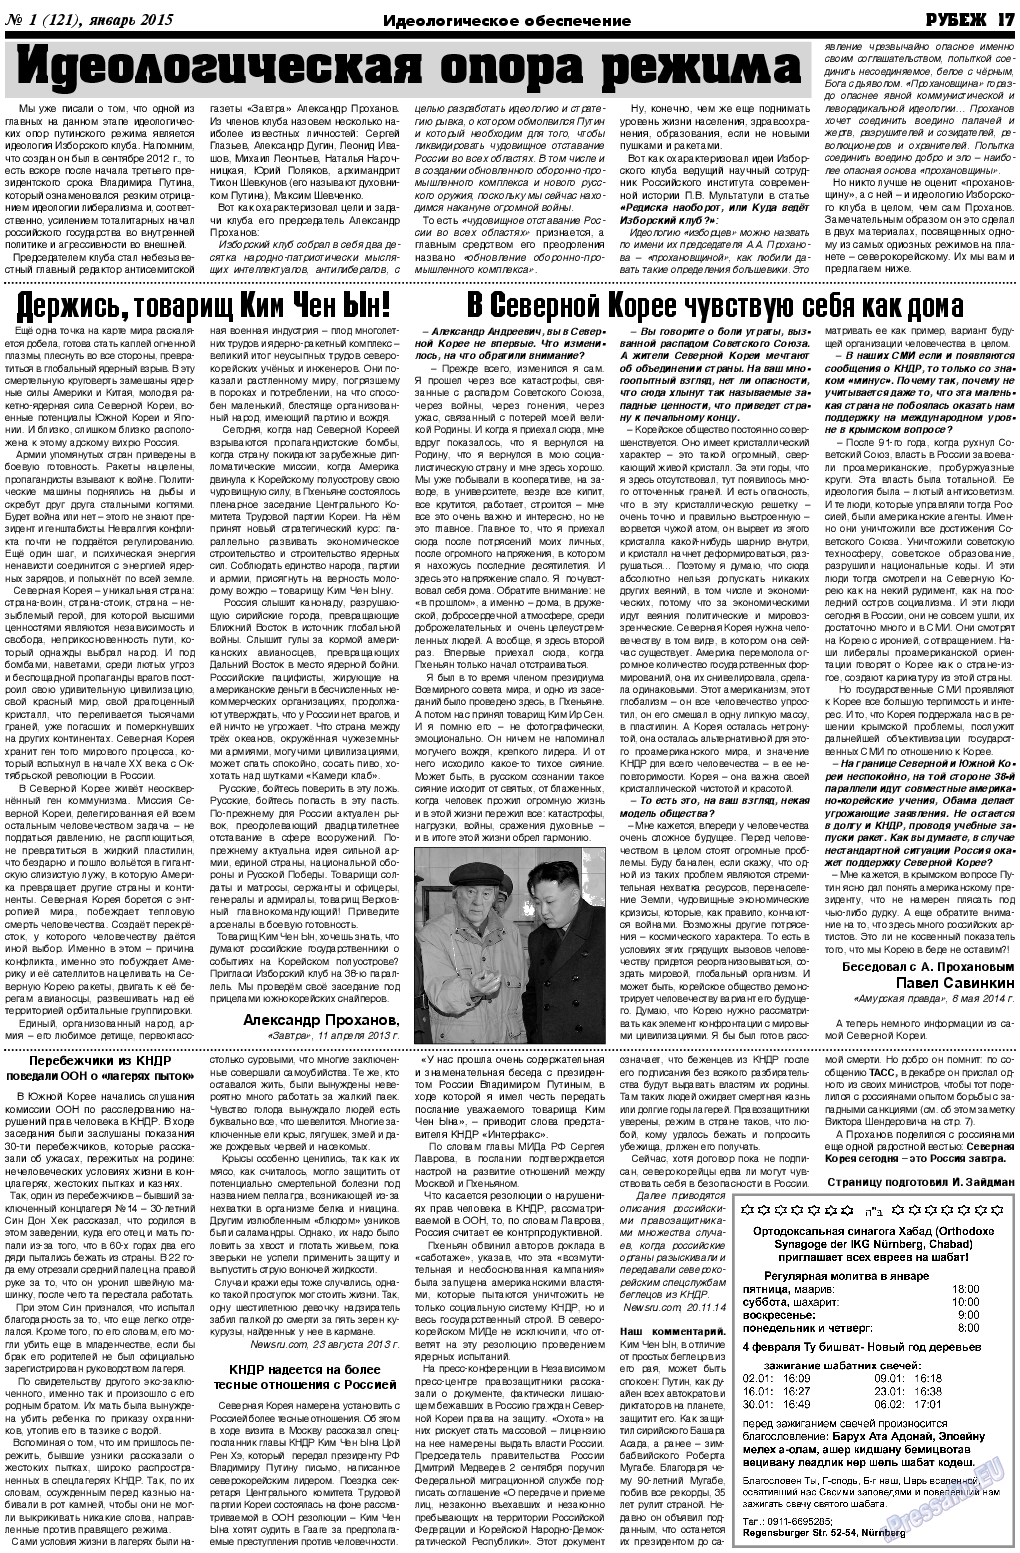 Рубеж, газета. 2015 №1 стр.17